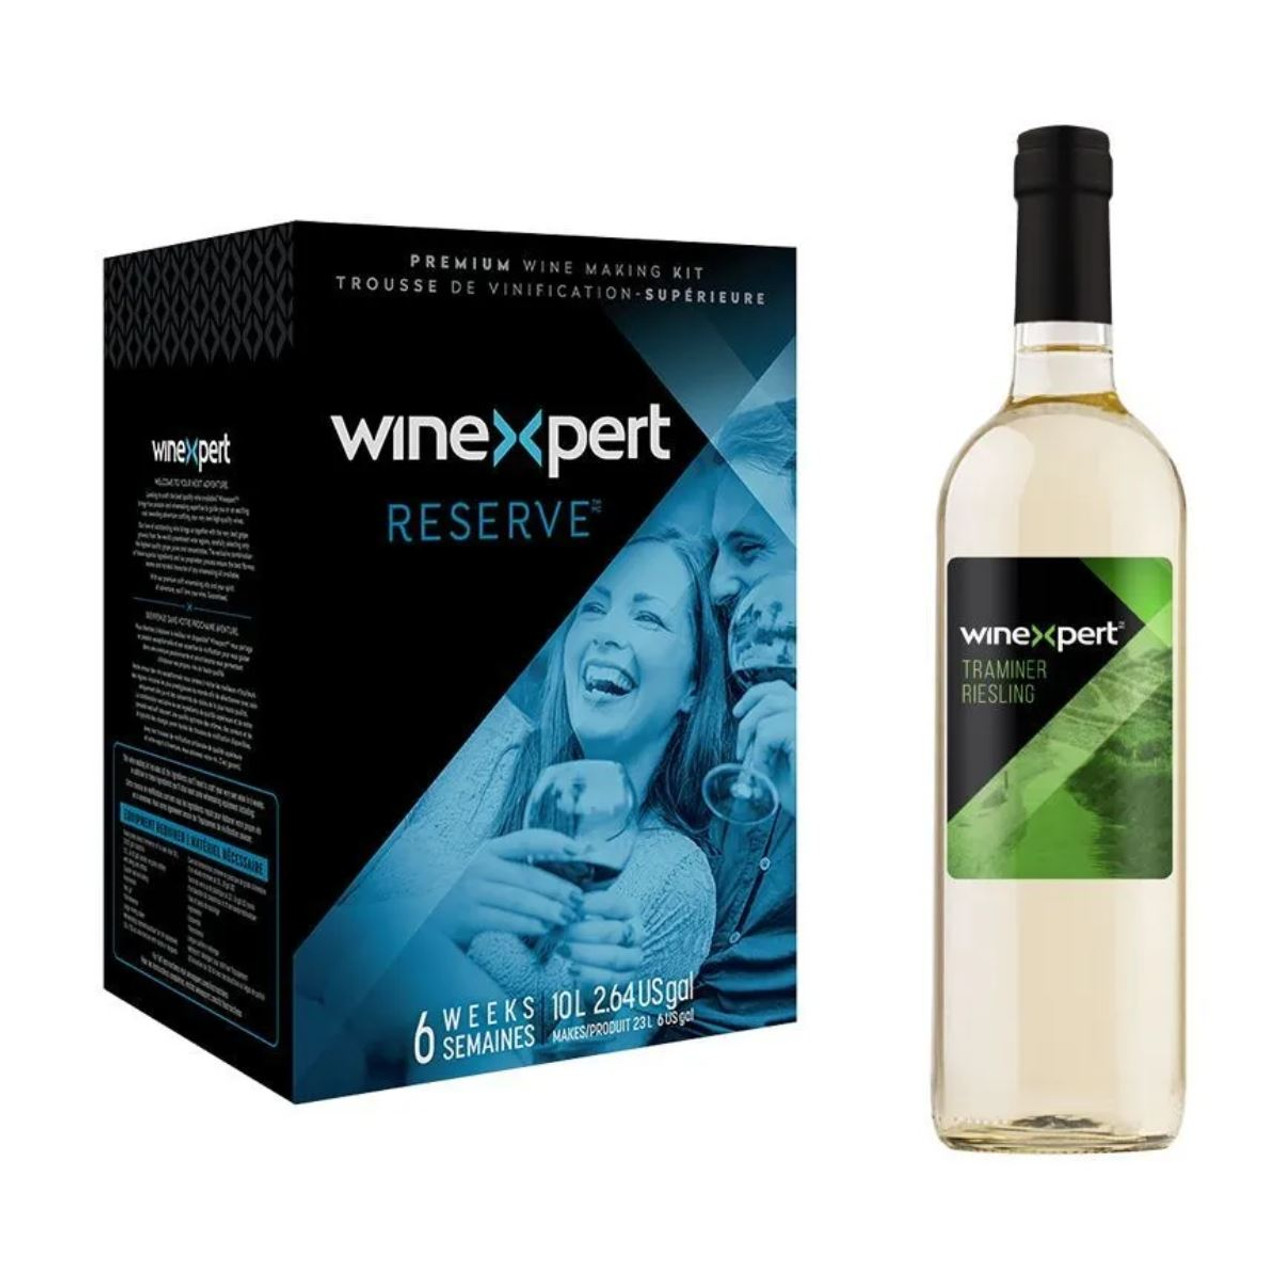 Winexpert Reserve Australian Traminer Riesling 14L White Wine Kit Makes 23L